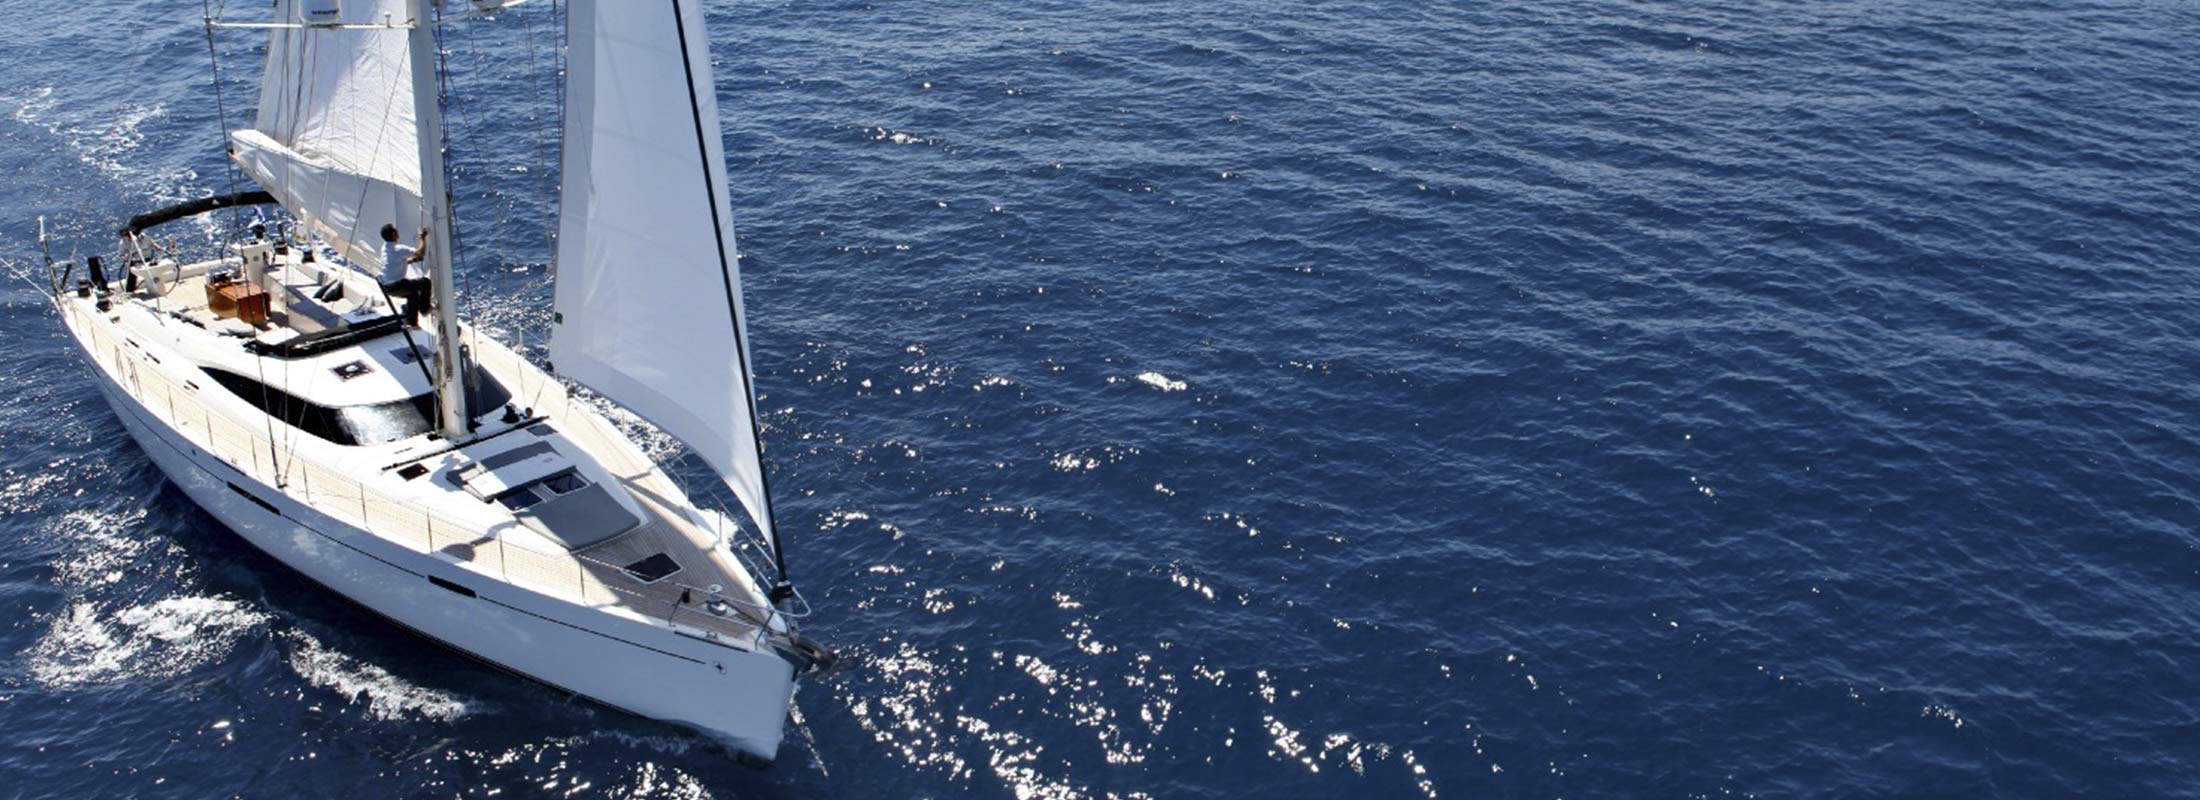 Shooting Star Sailing Yacht for Charter Mediterranean slider 2